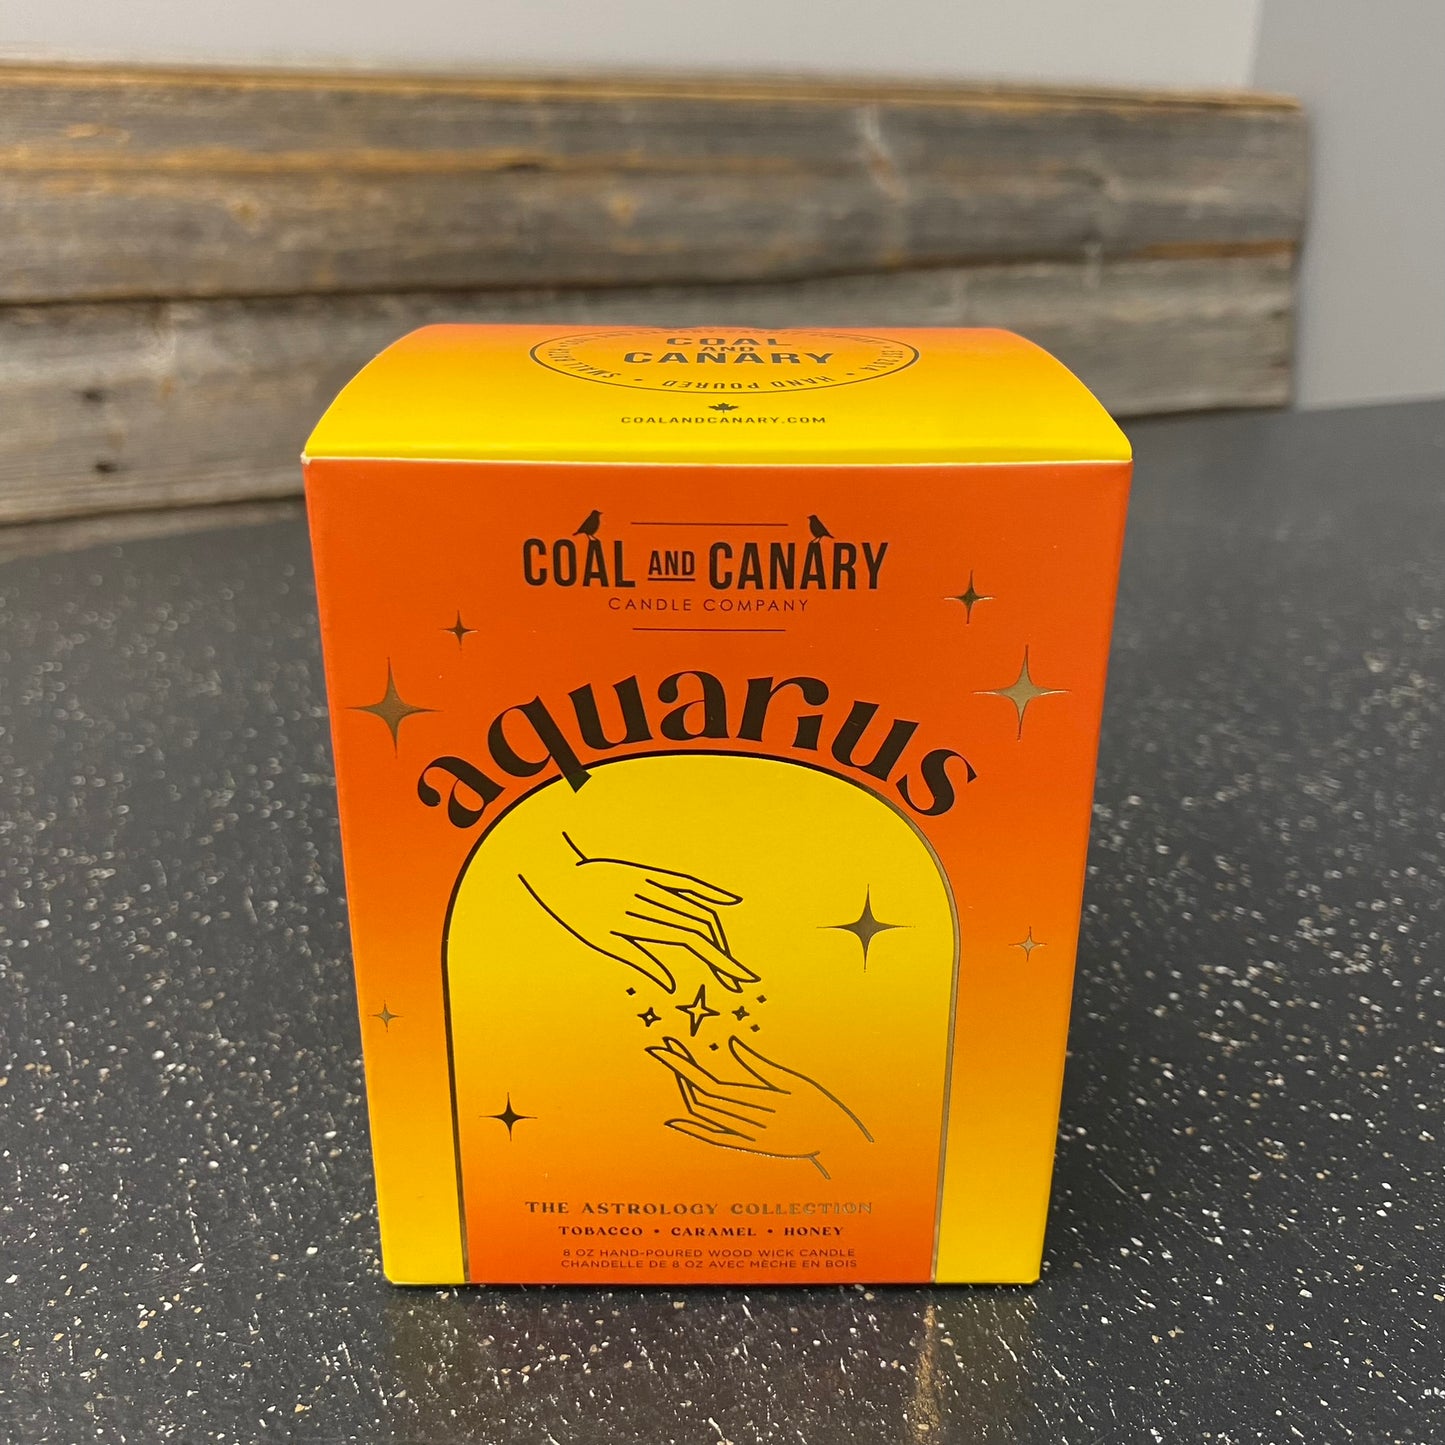 Aquarius by Coal & Canary